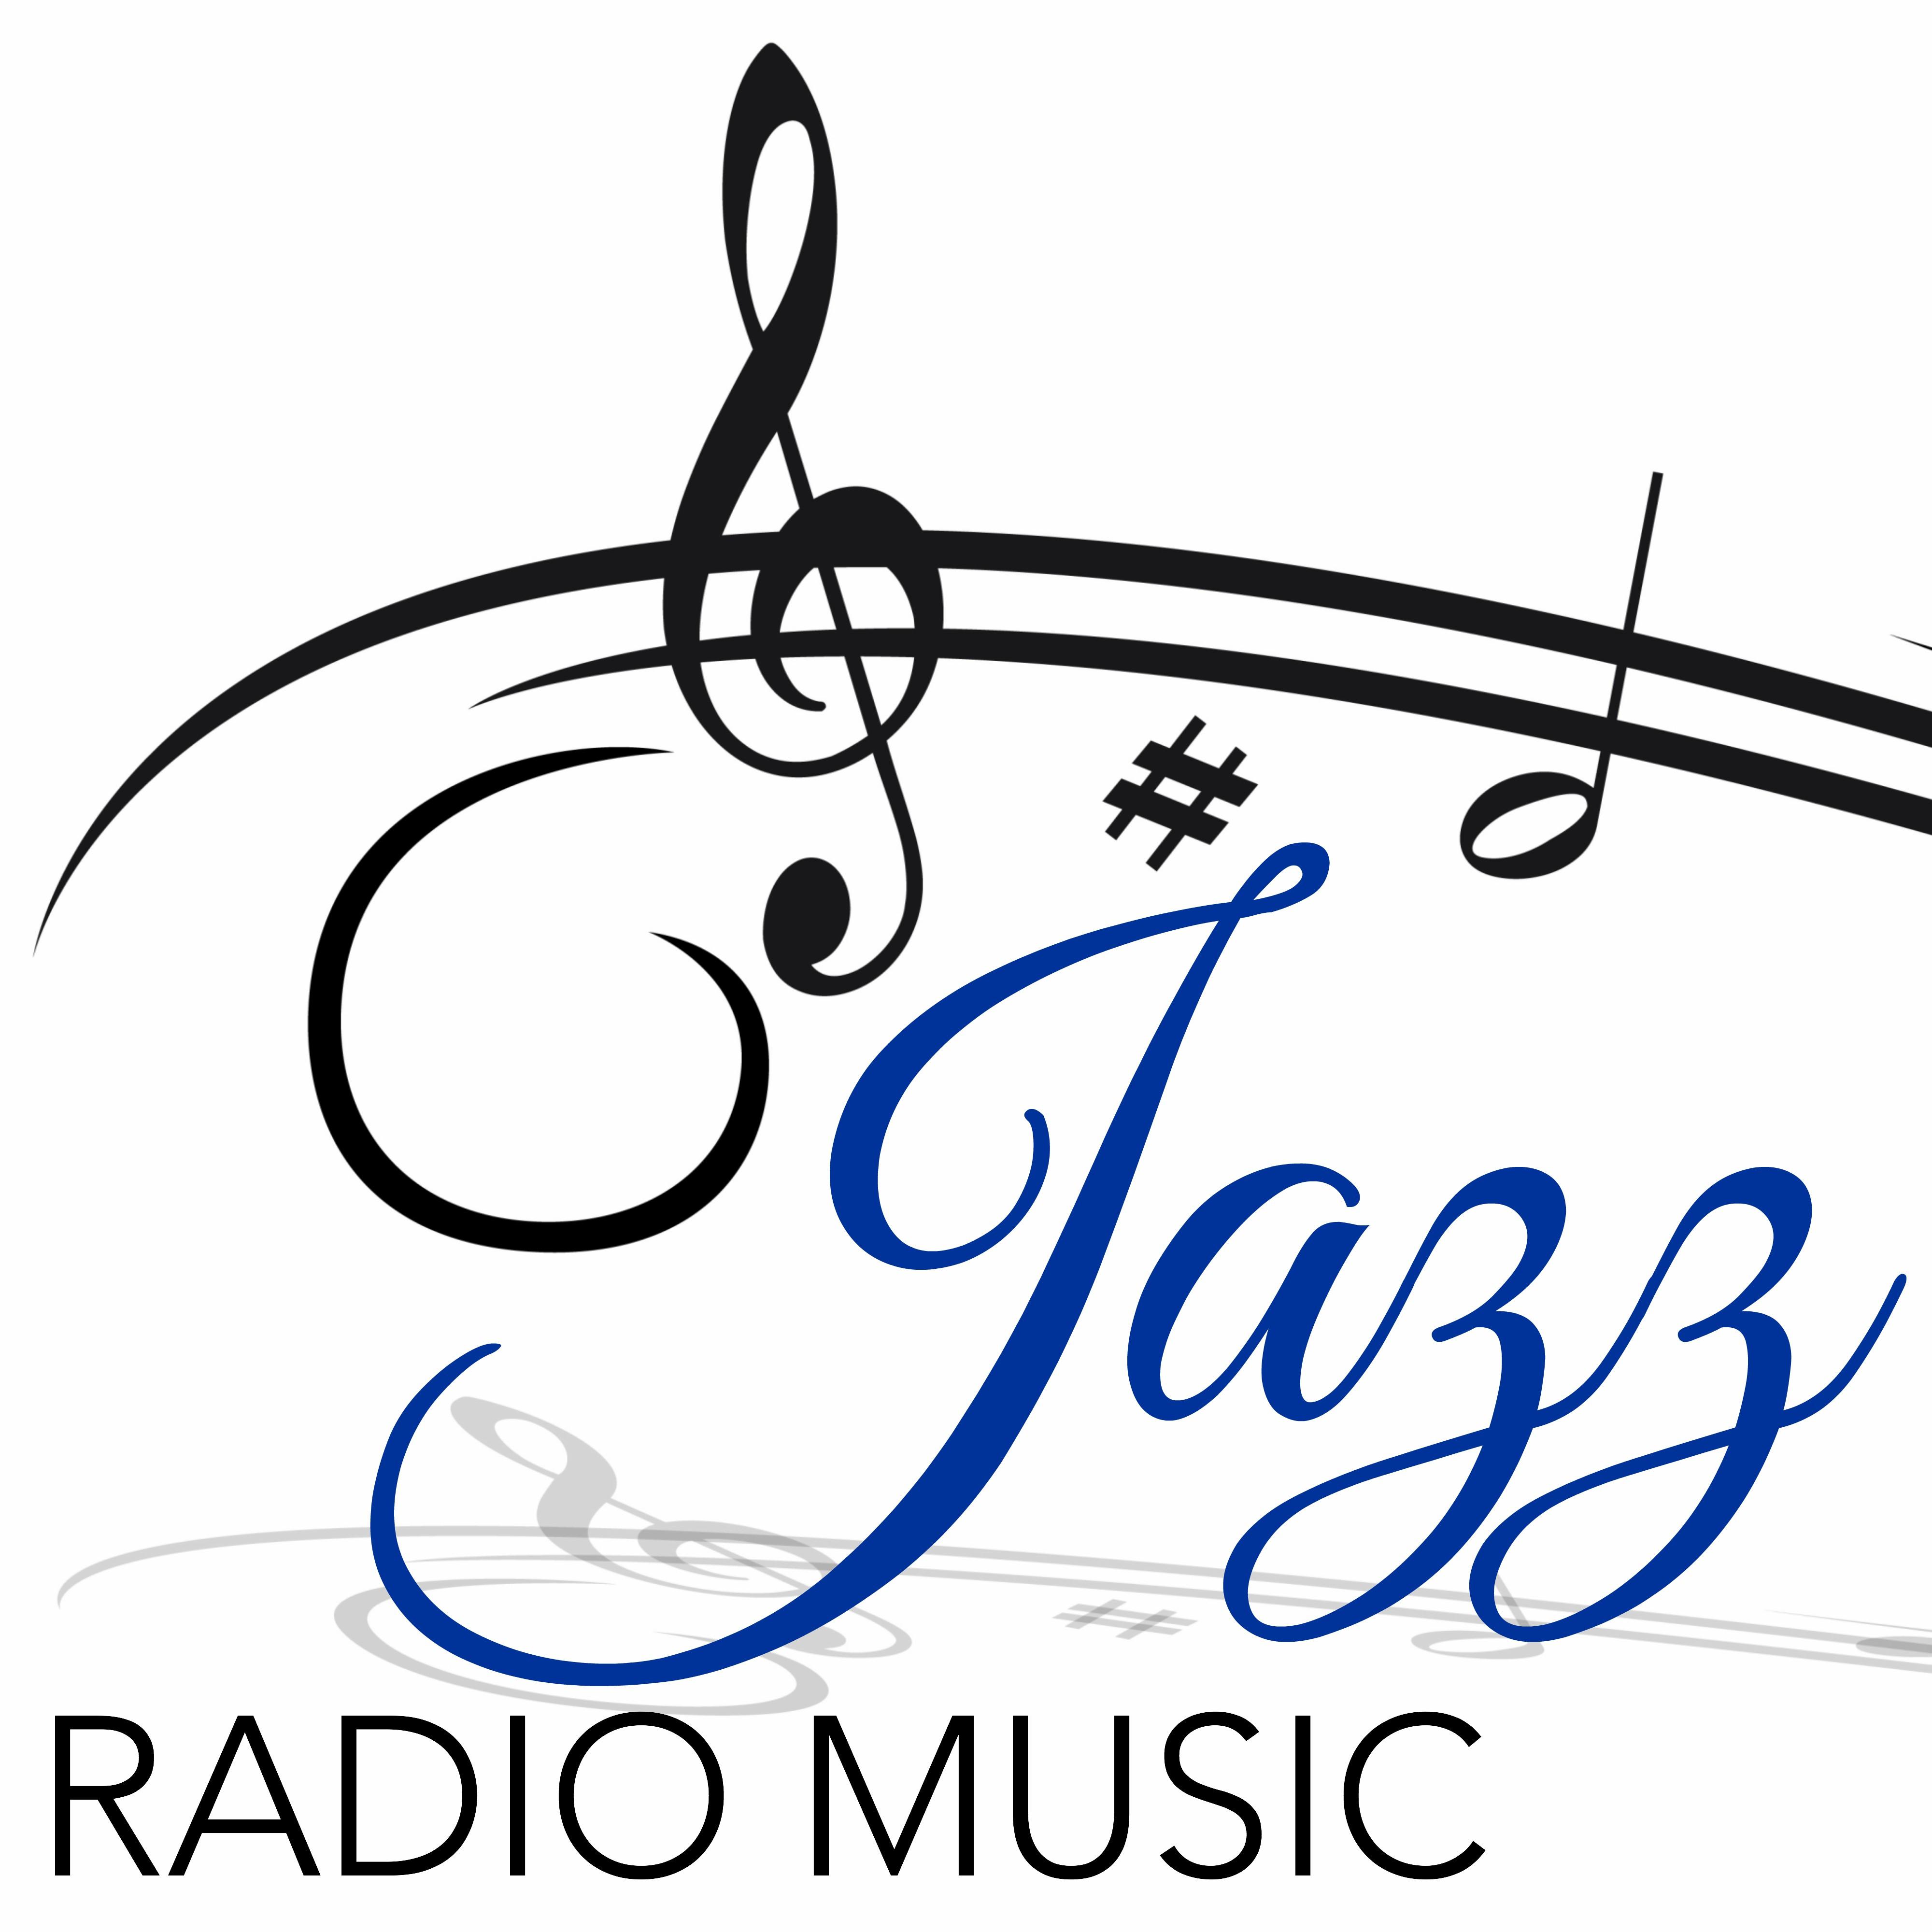 Jazz Radio Music - Cool Jazz Songs for Jazz & Charleston Party